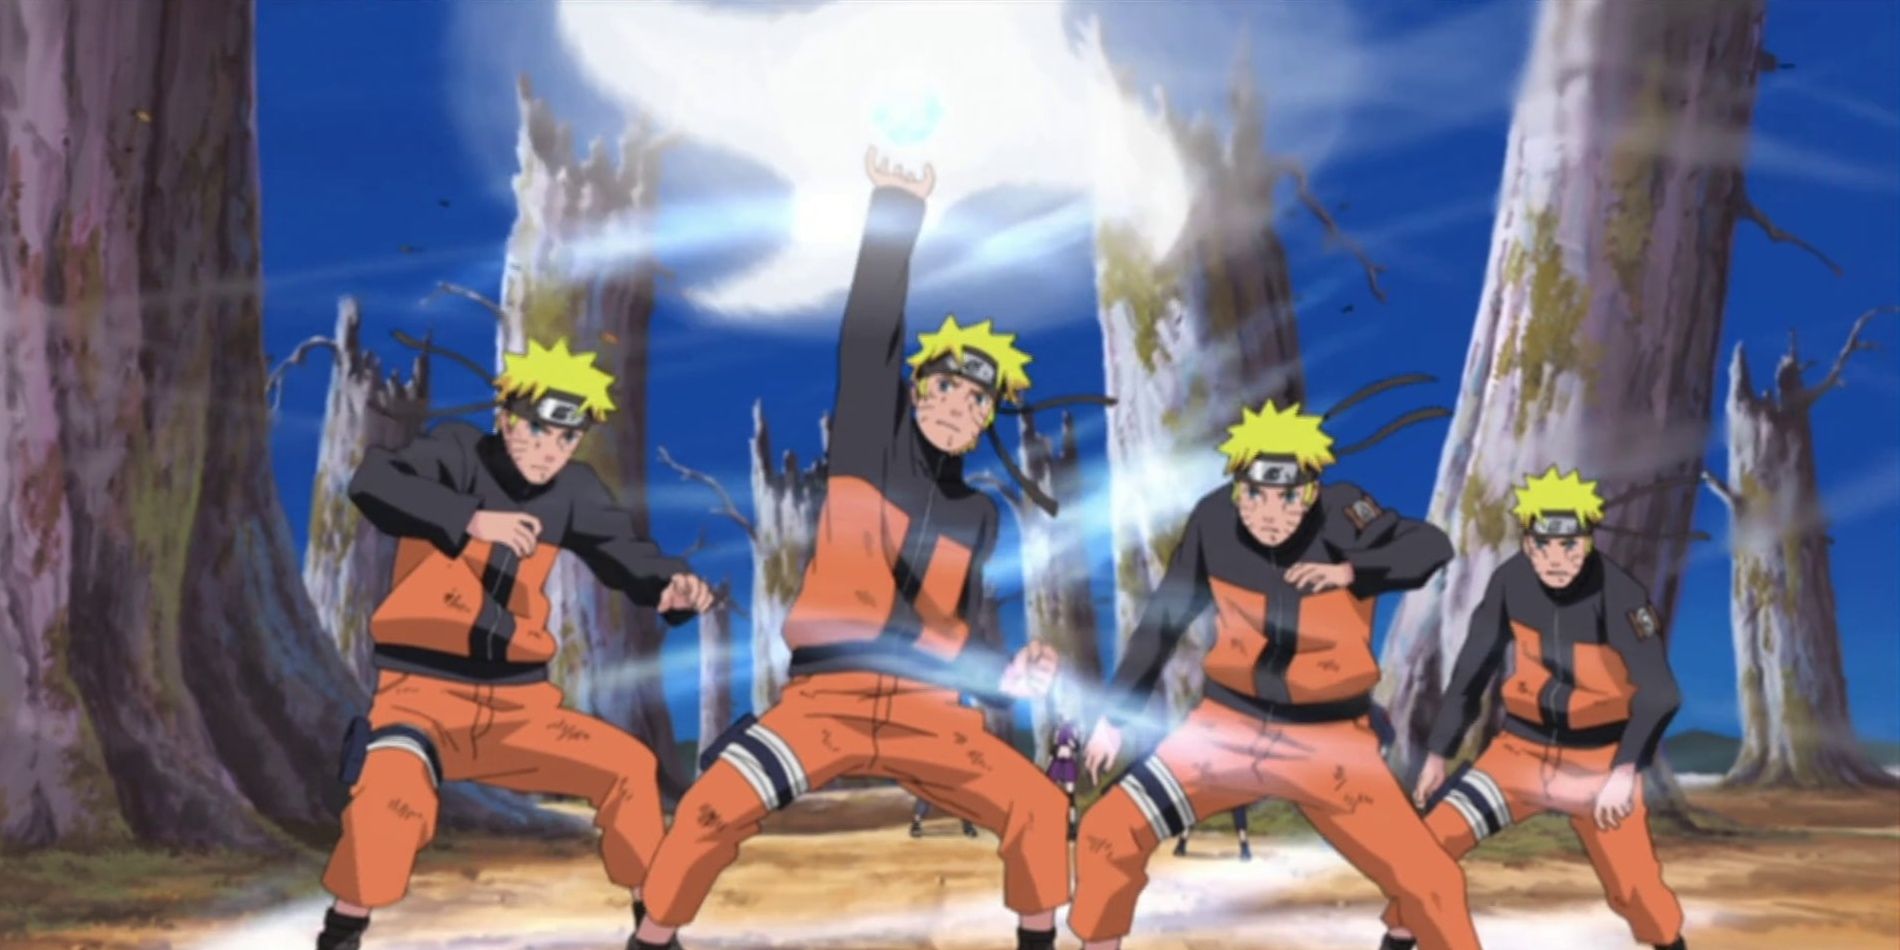 Four shadow clones are shown wielding the rasenshuriken in Naruto.